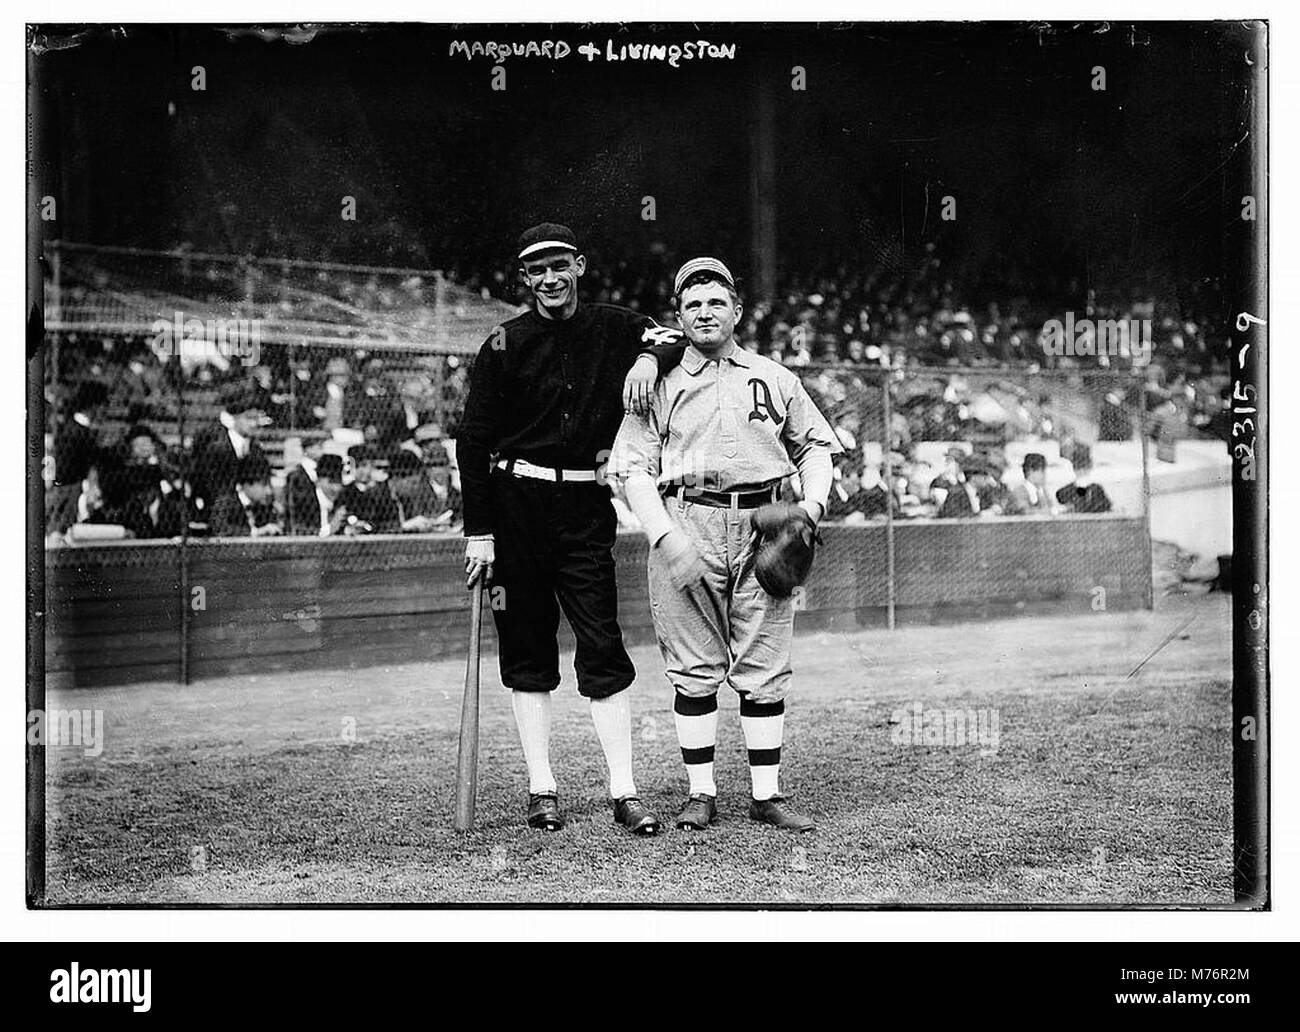 Rube Marquard, New York, NL & Paddy Livingston, Philadelphia, AL at World Series (baseball) LCCN2014689849 Stock Photo